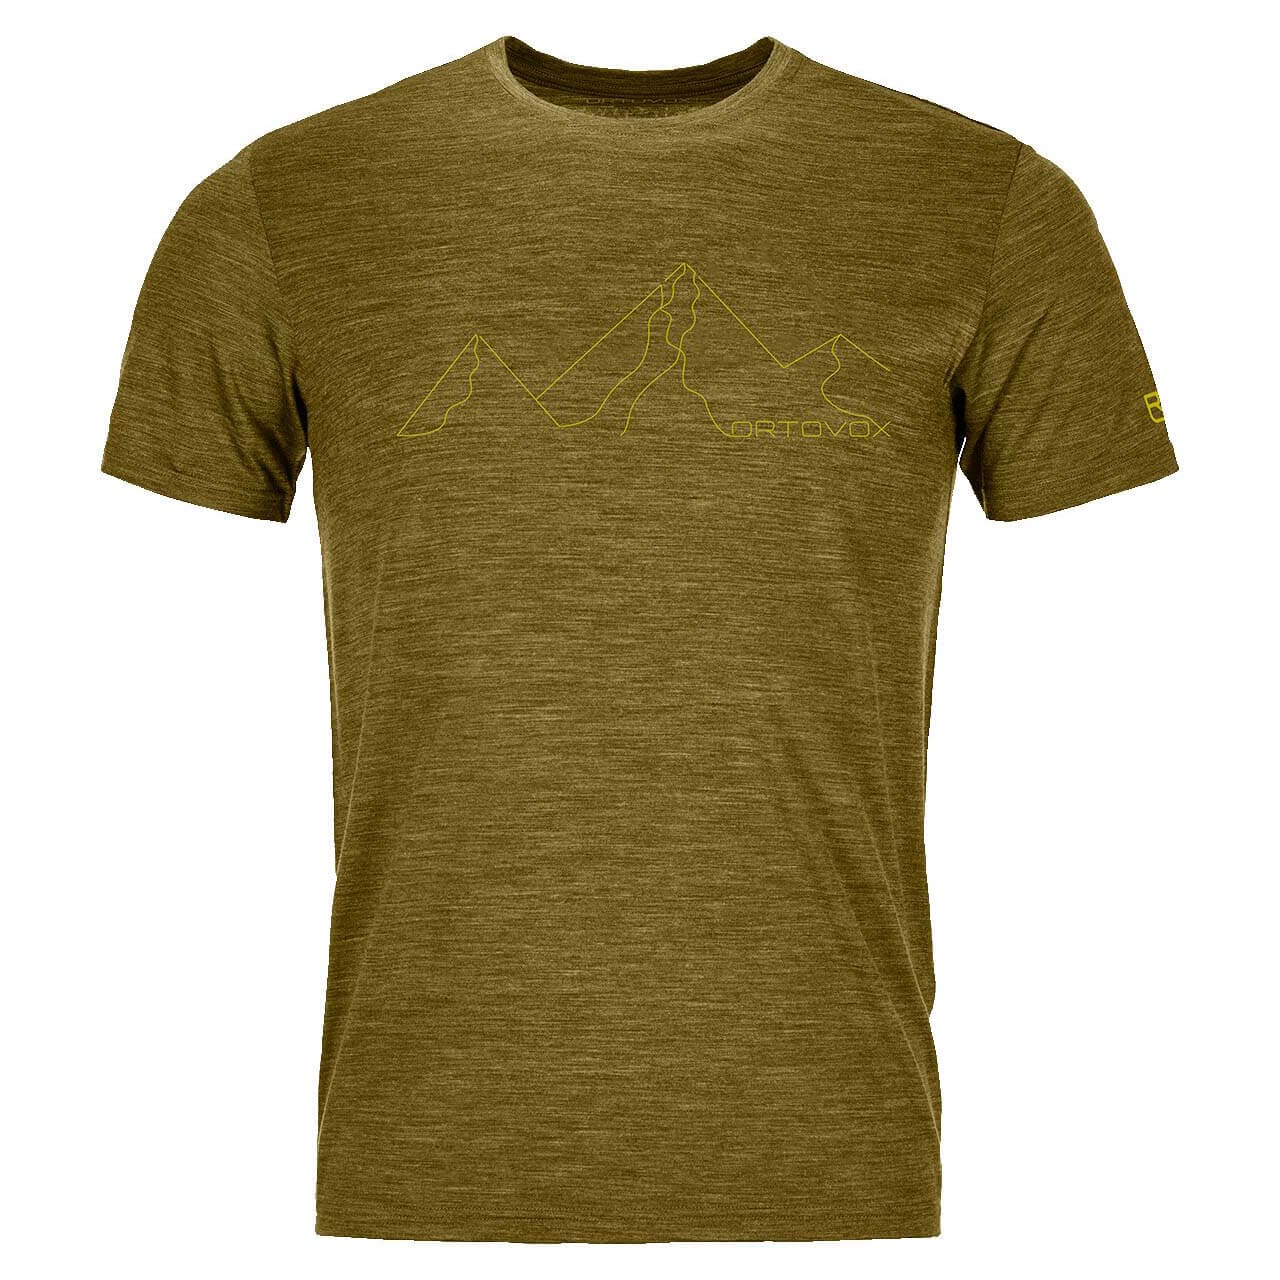 Ortovox Mountain T-Shirt 150 Cool - Green Moss Blend, S von Ortovox